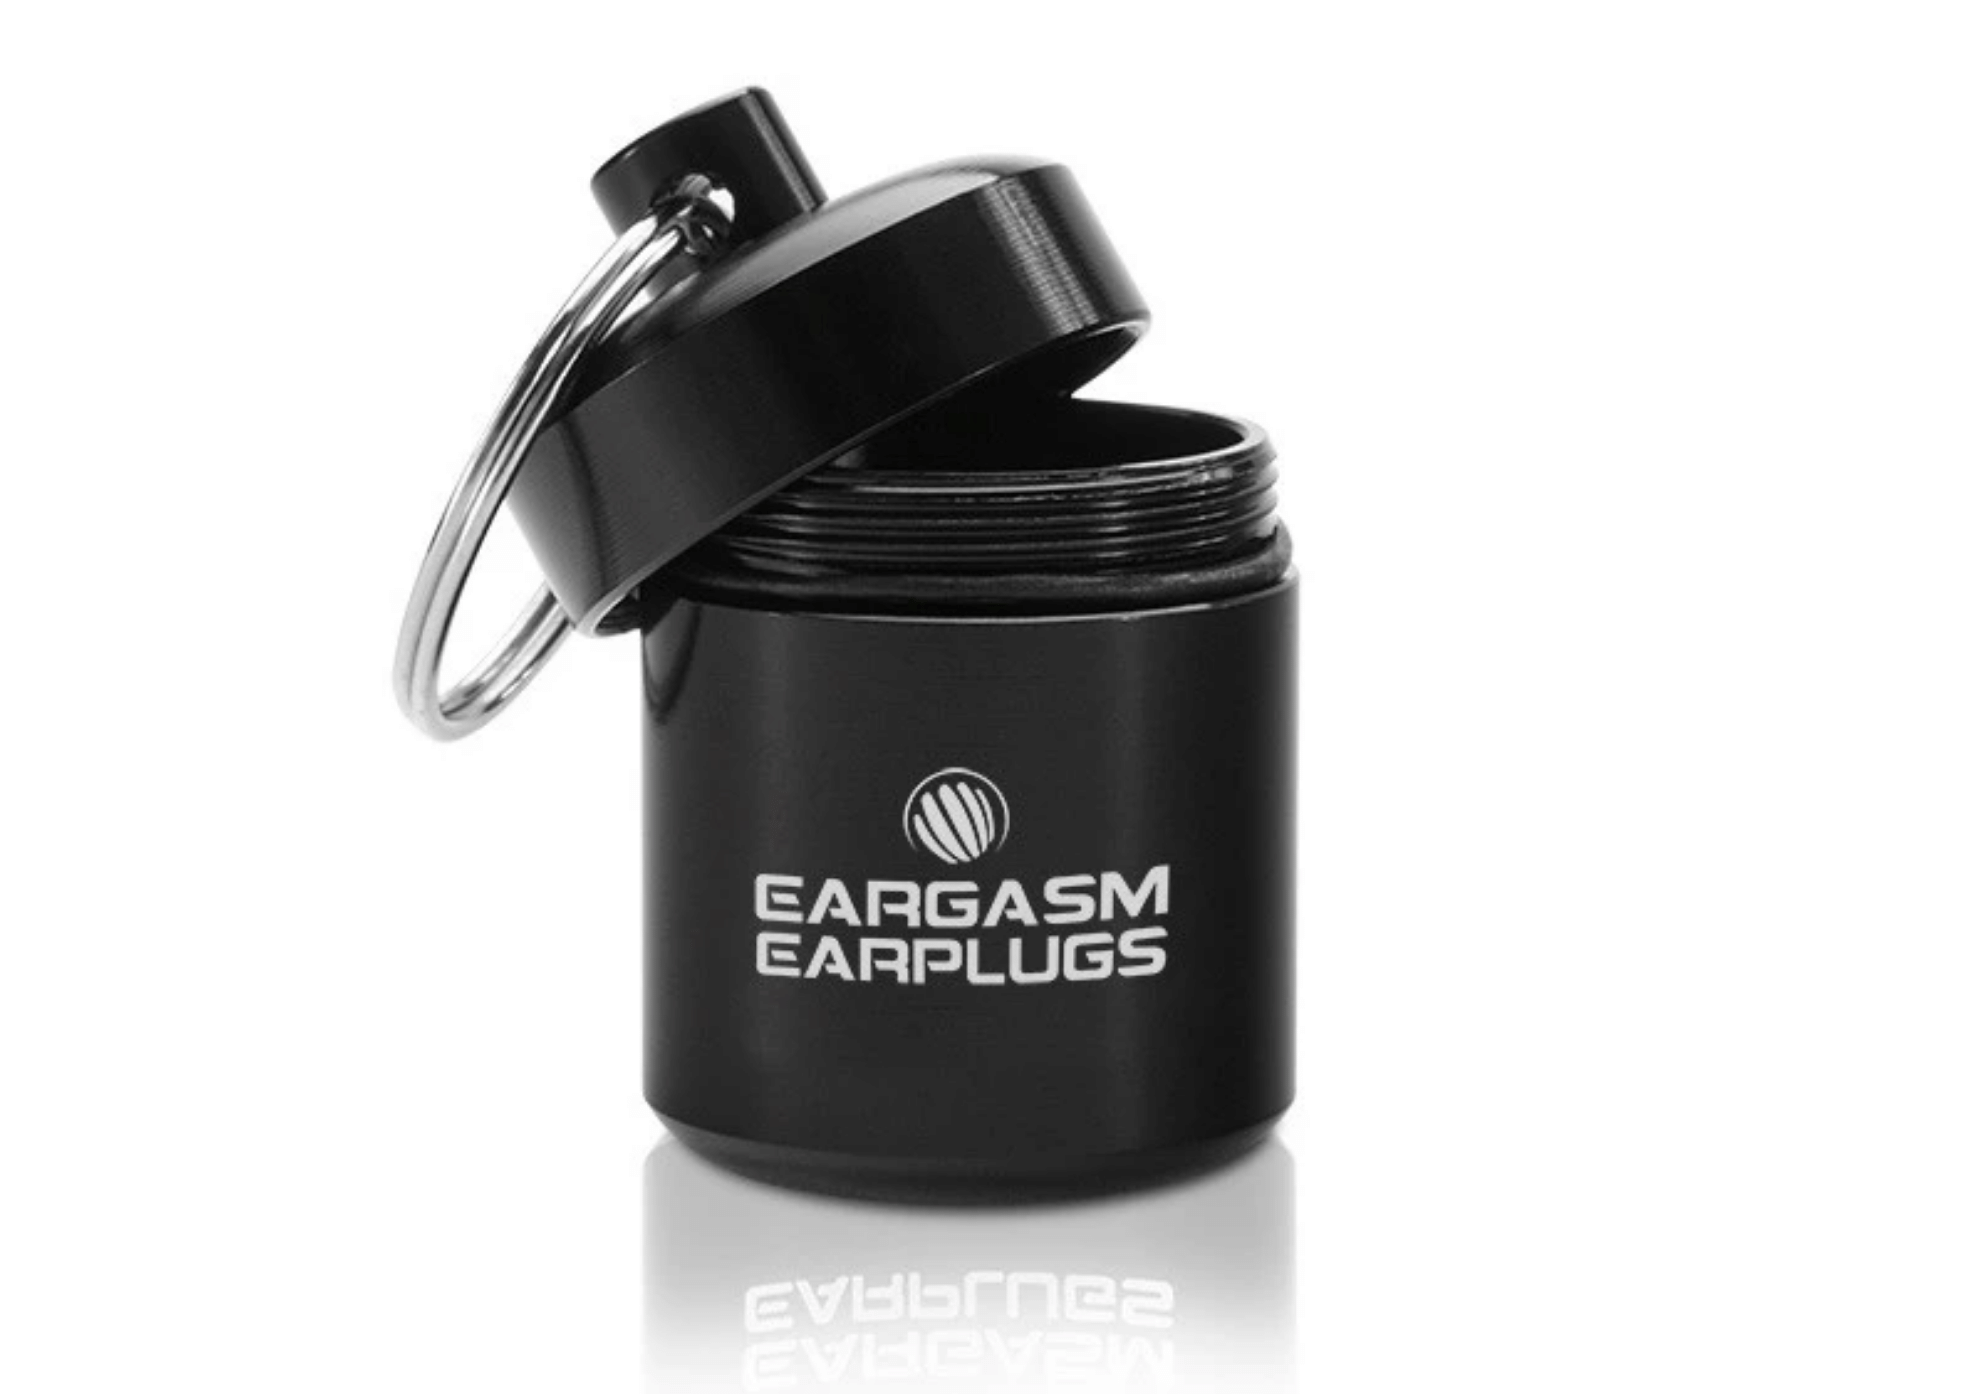 FREE GIFT | Eargasm Earplugs Carrying Case